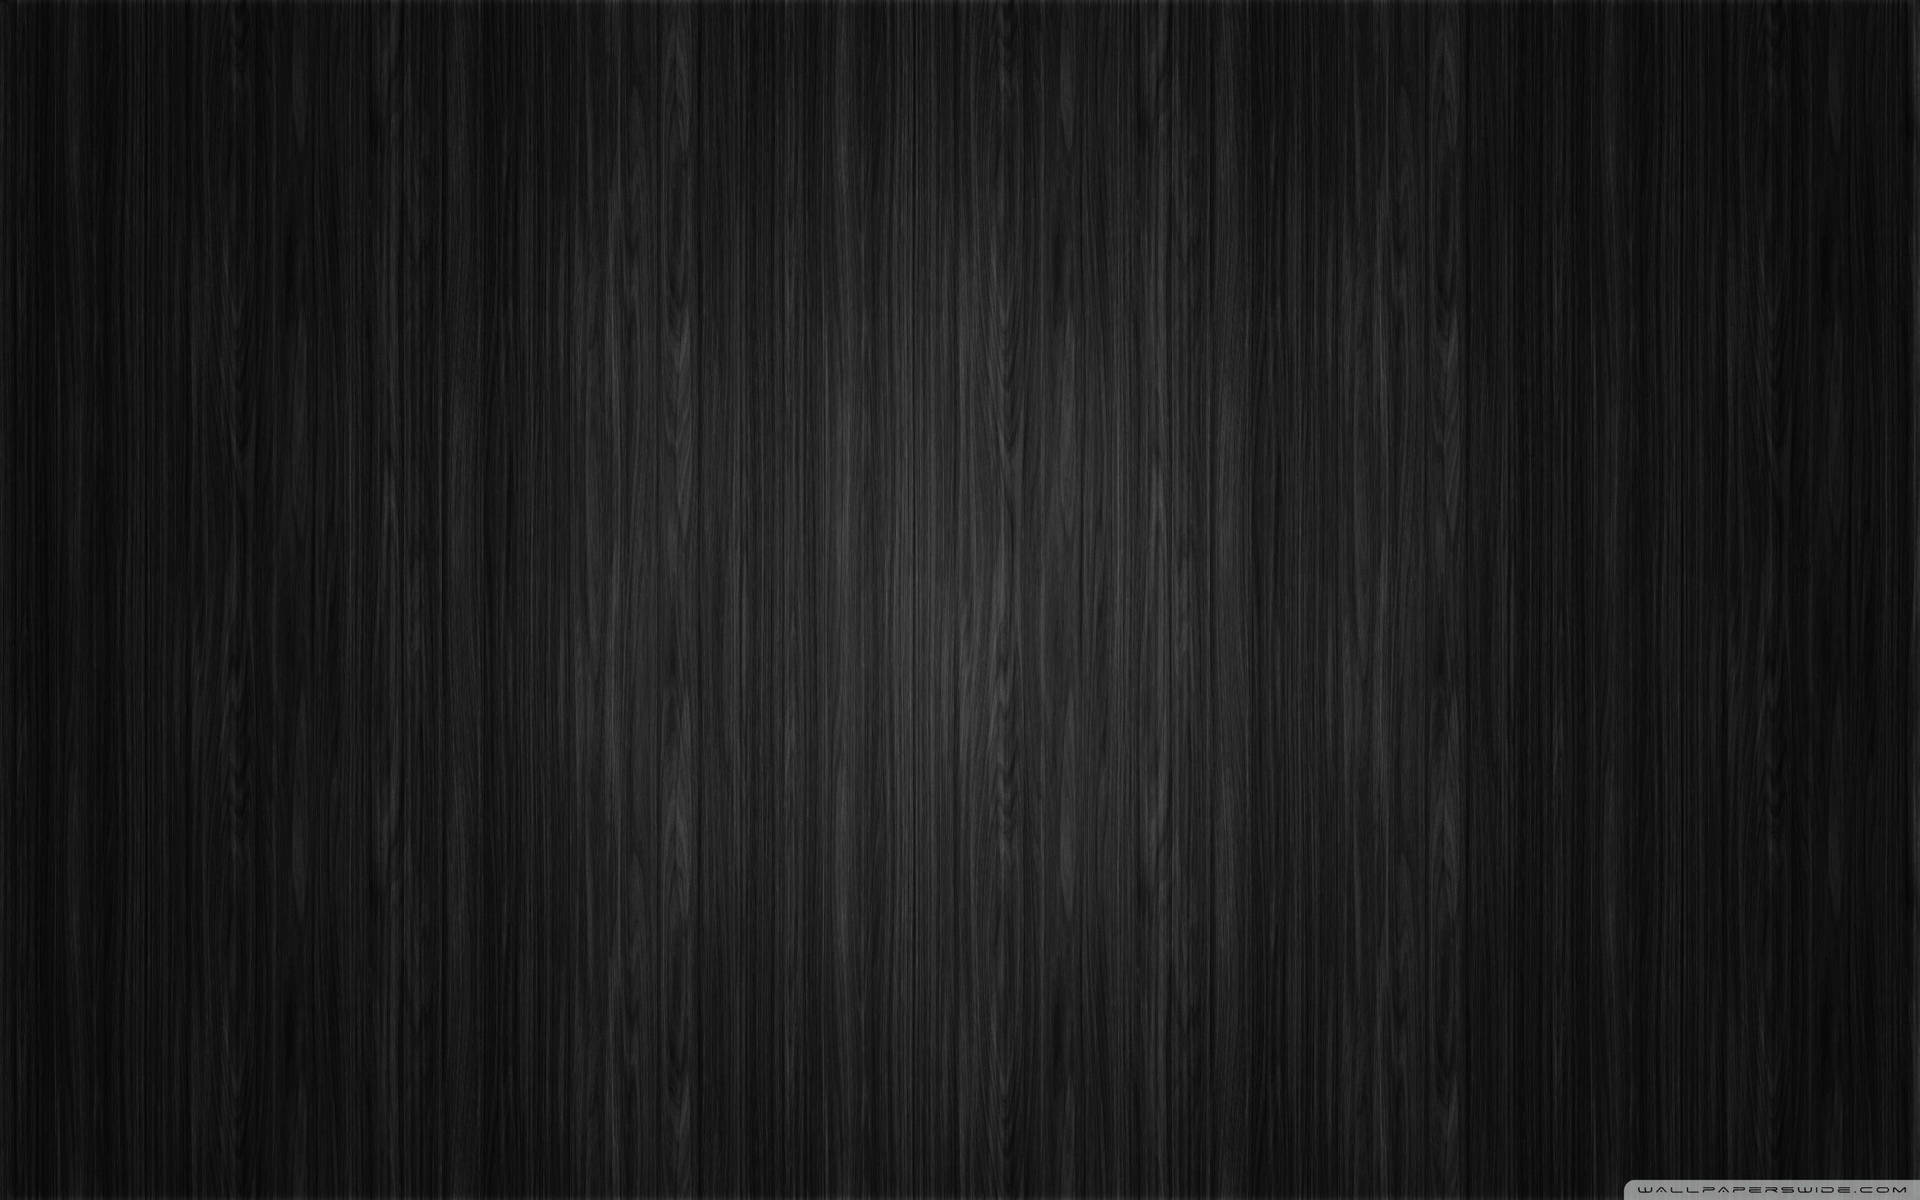 Dark Aesthetic Wood Grain Background